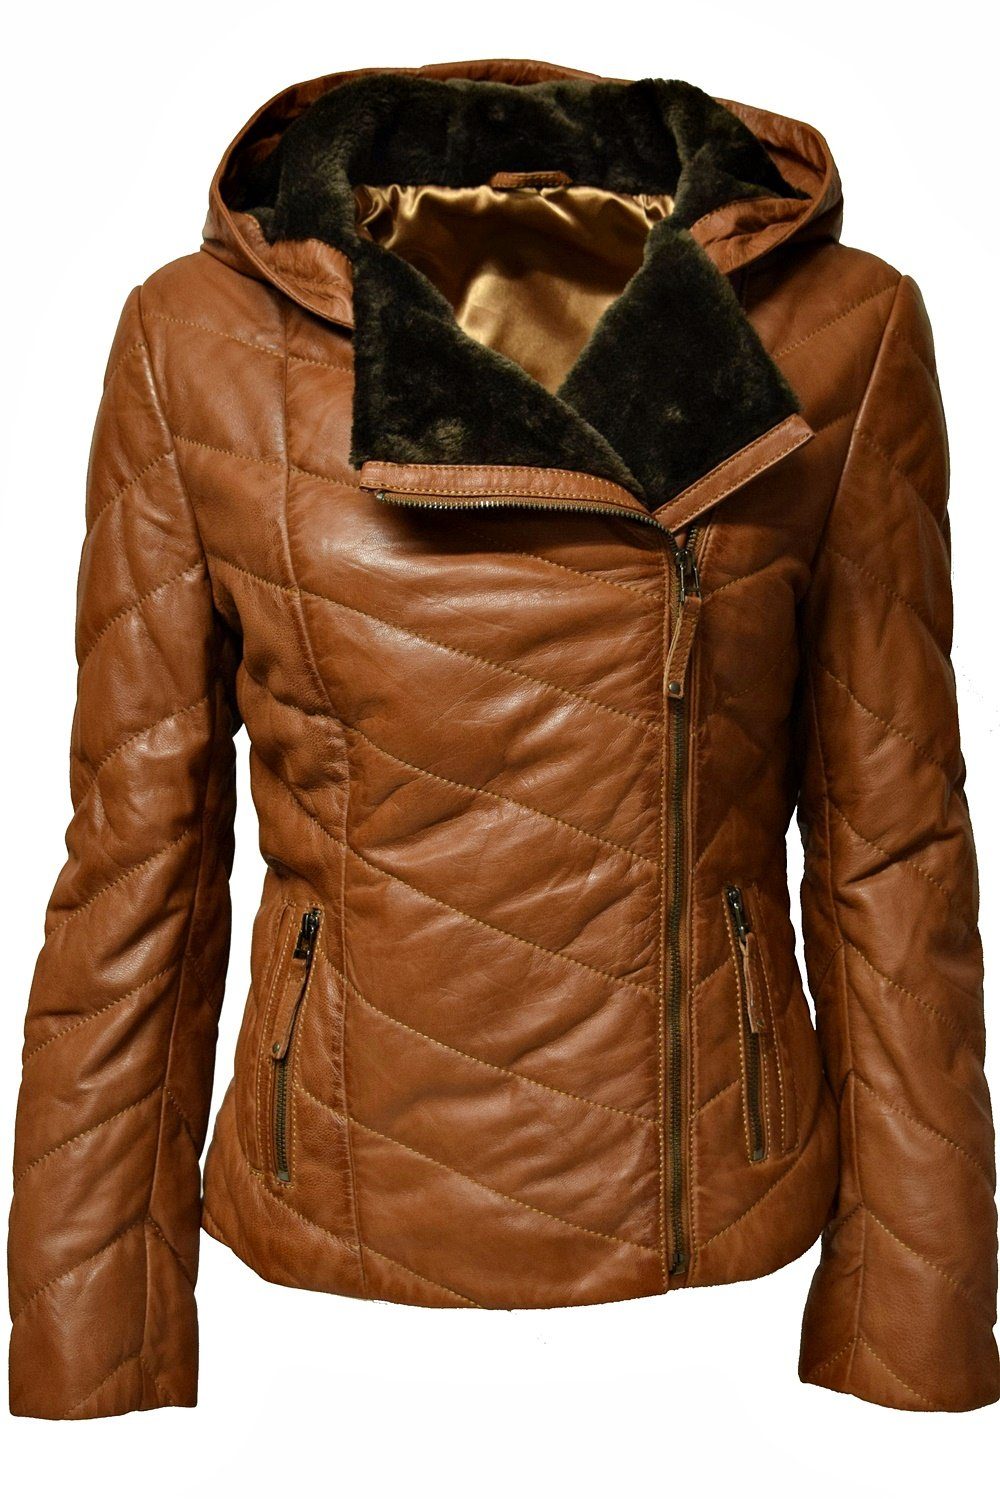 Zimmert Leather Lederjacke Mariella Stepp-Lederjacke aus weichem Leder mit Kapuze Dunkelcognac